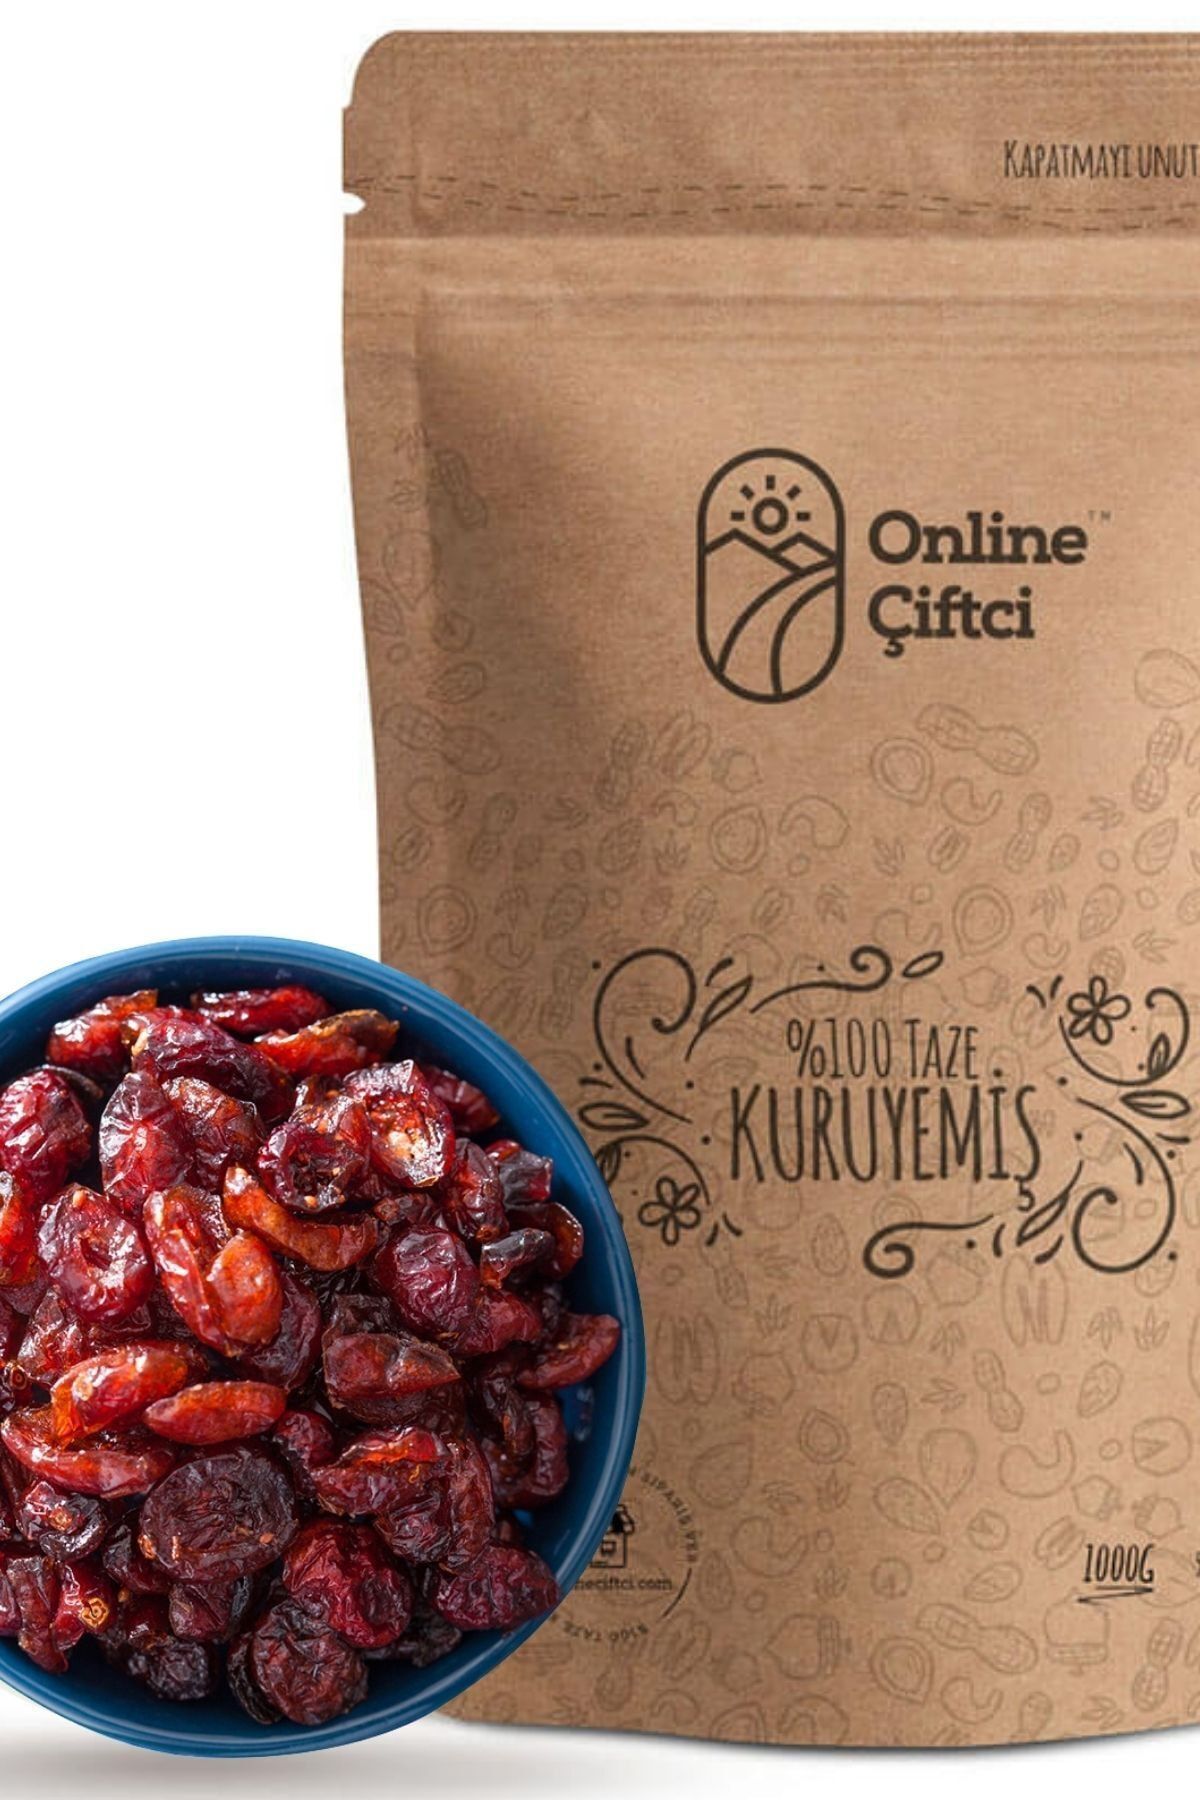 Karlıoğlu Cranberry Turna Yemiş 1kg